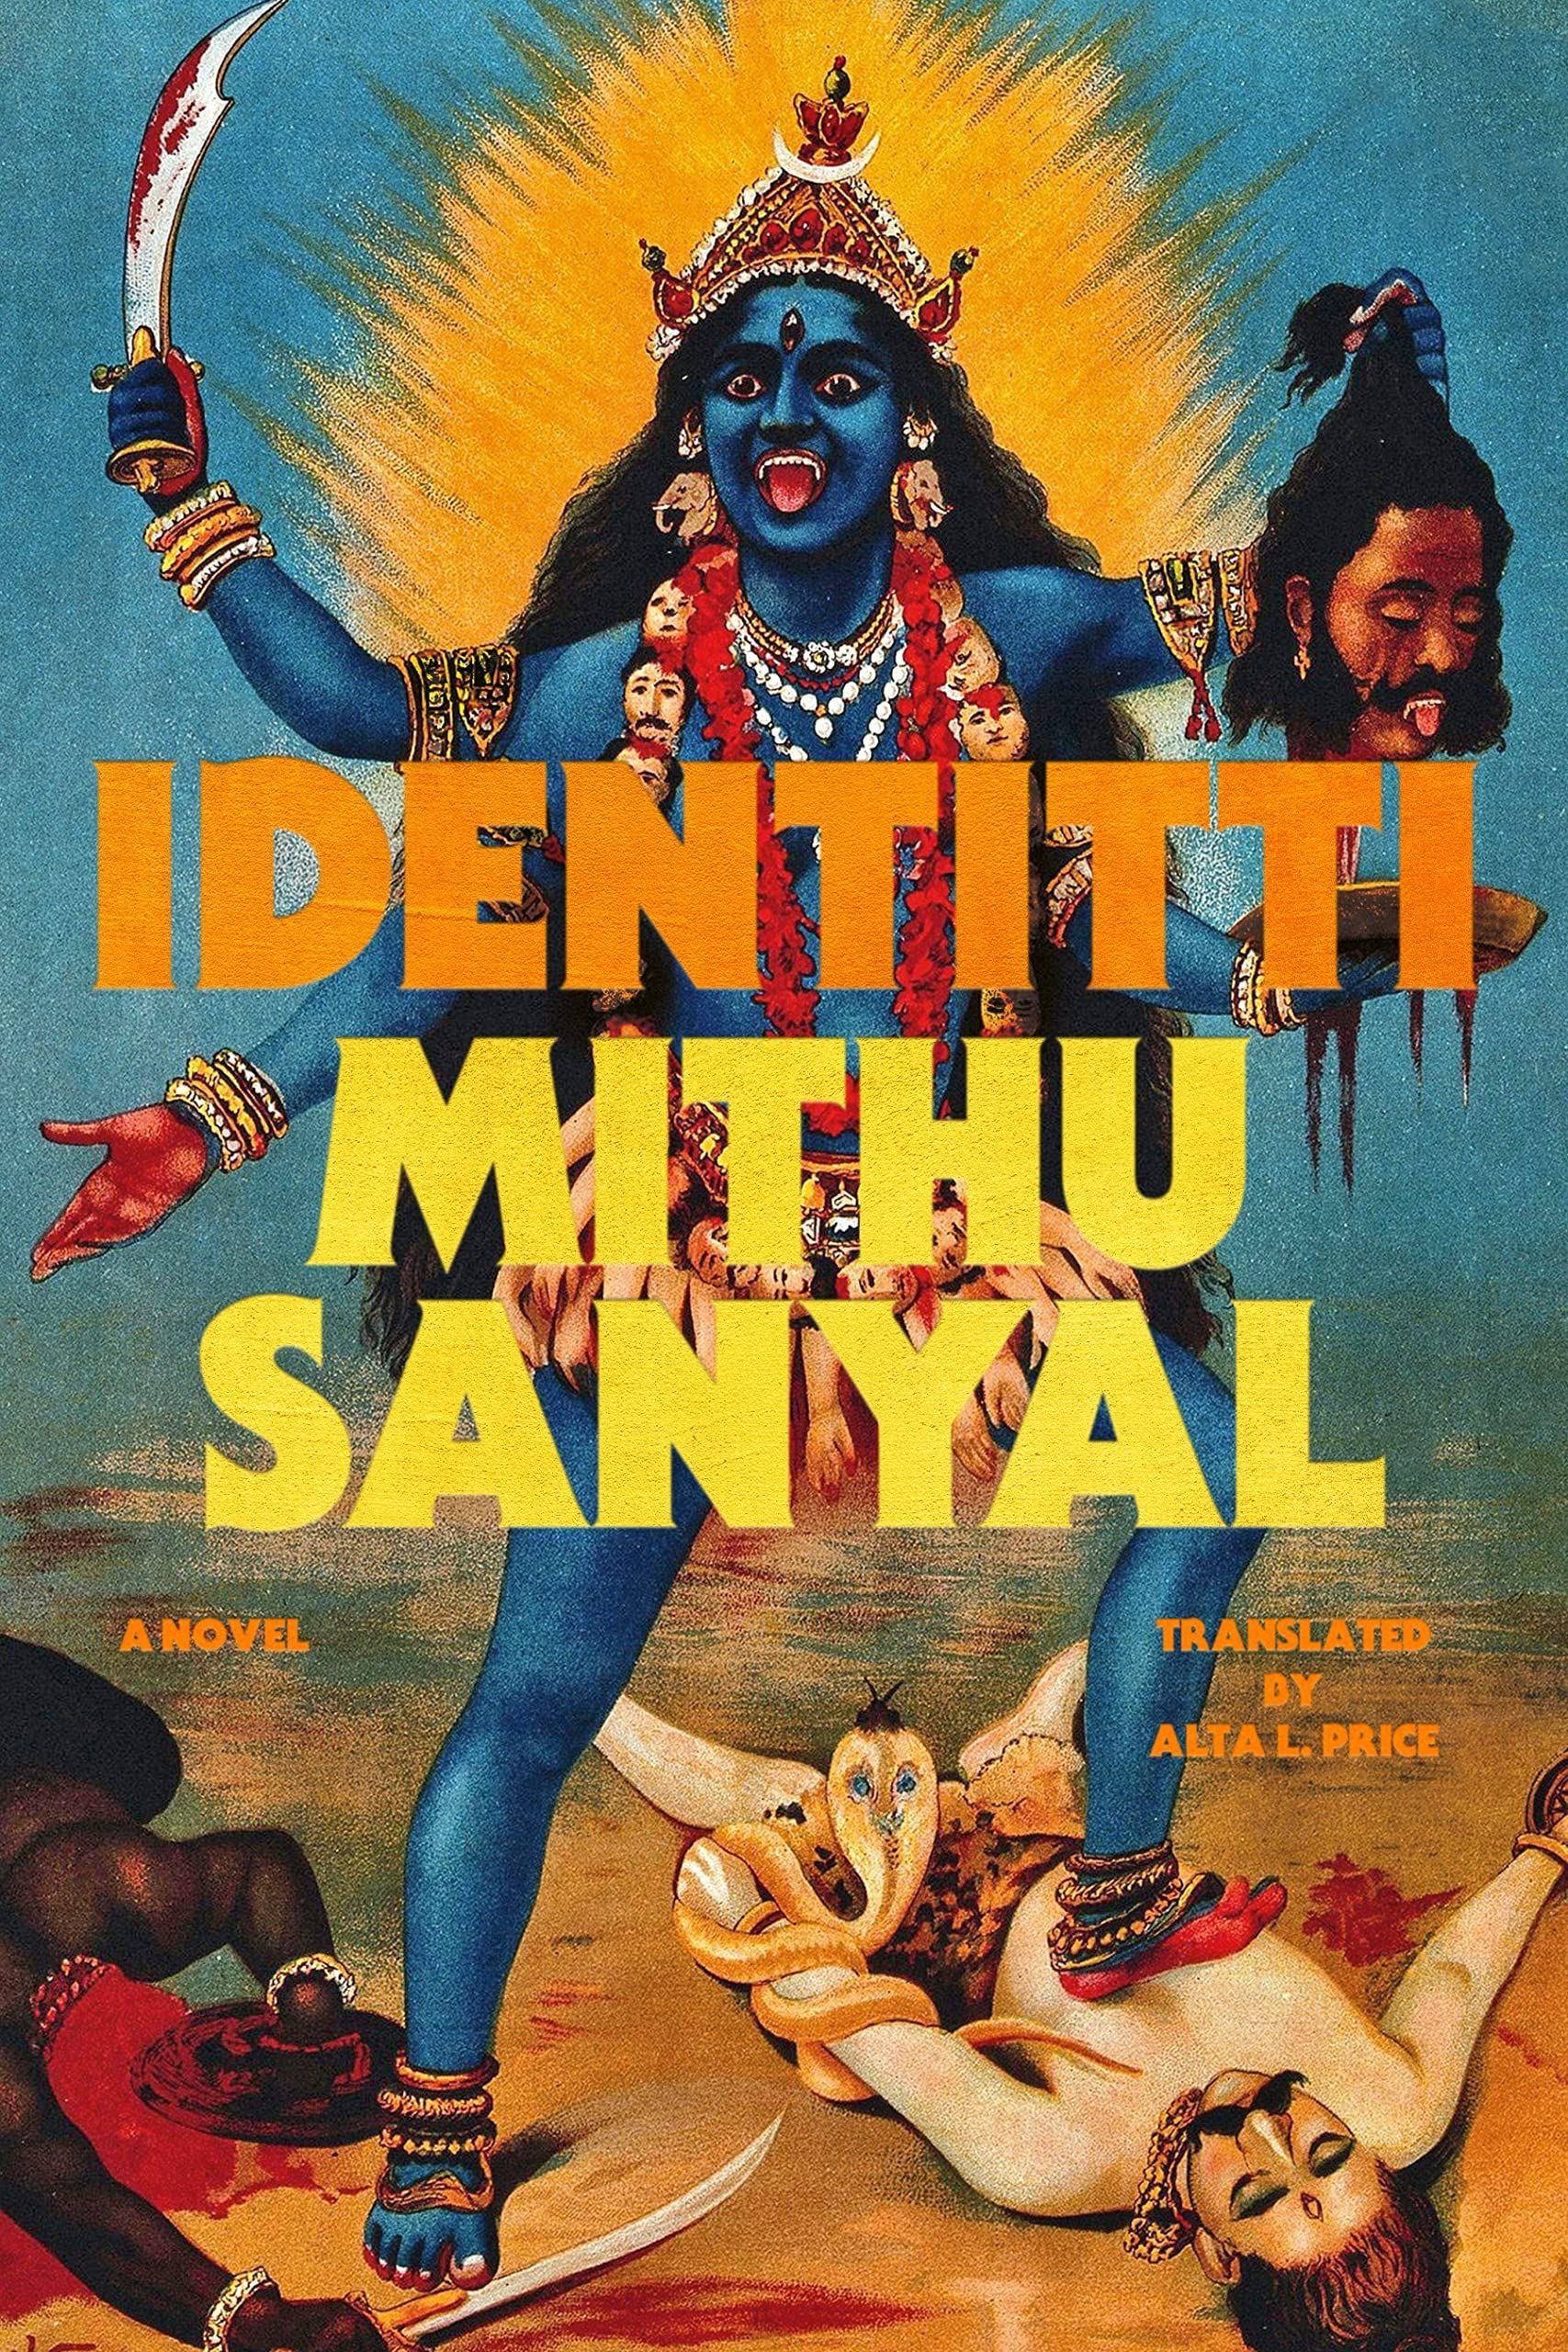 Kali Meets the Twitterati: On Mithu Sanyal’s “Identitti”